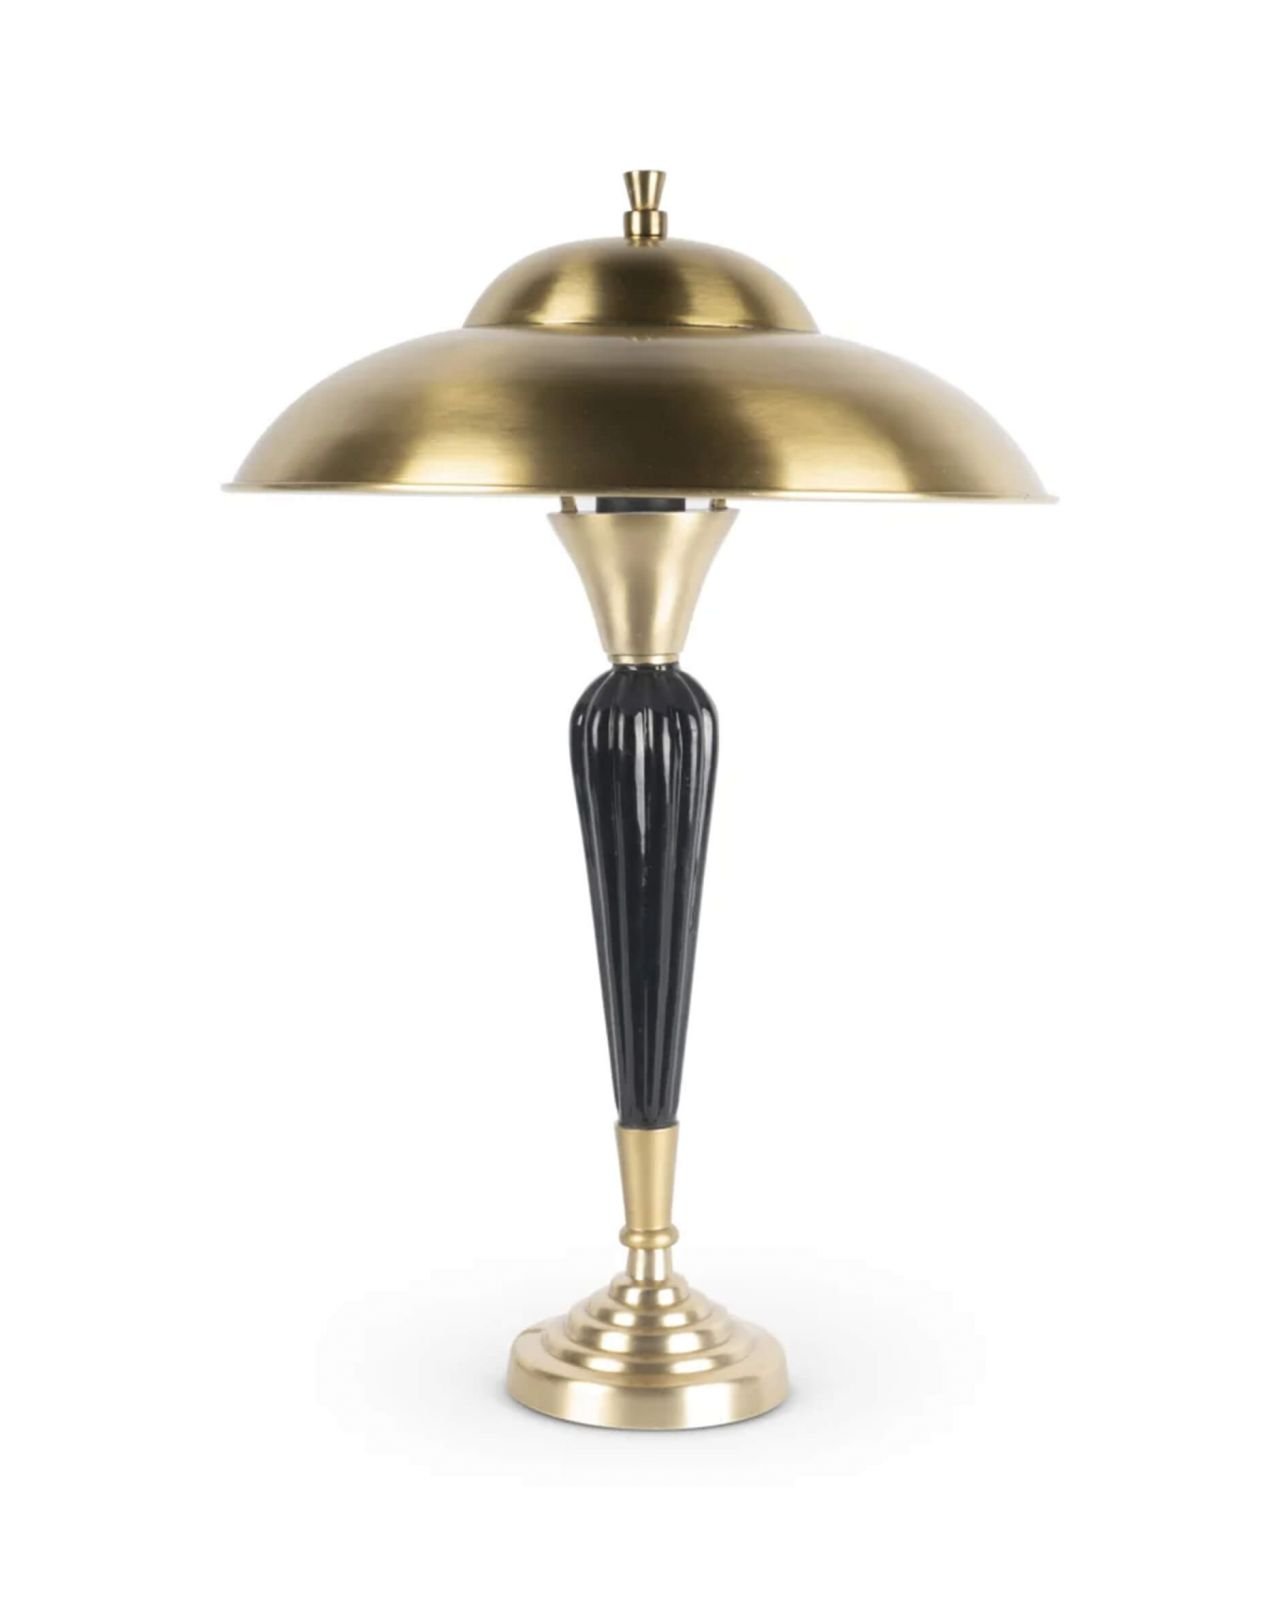 Miami Mushroom desk lamp black / gold